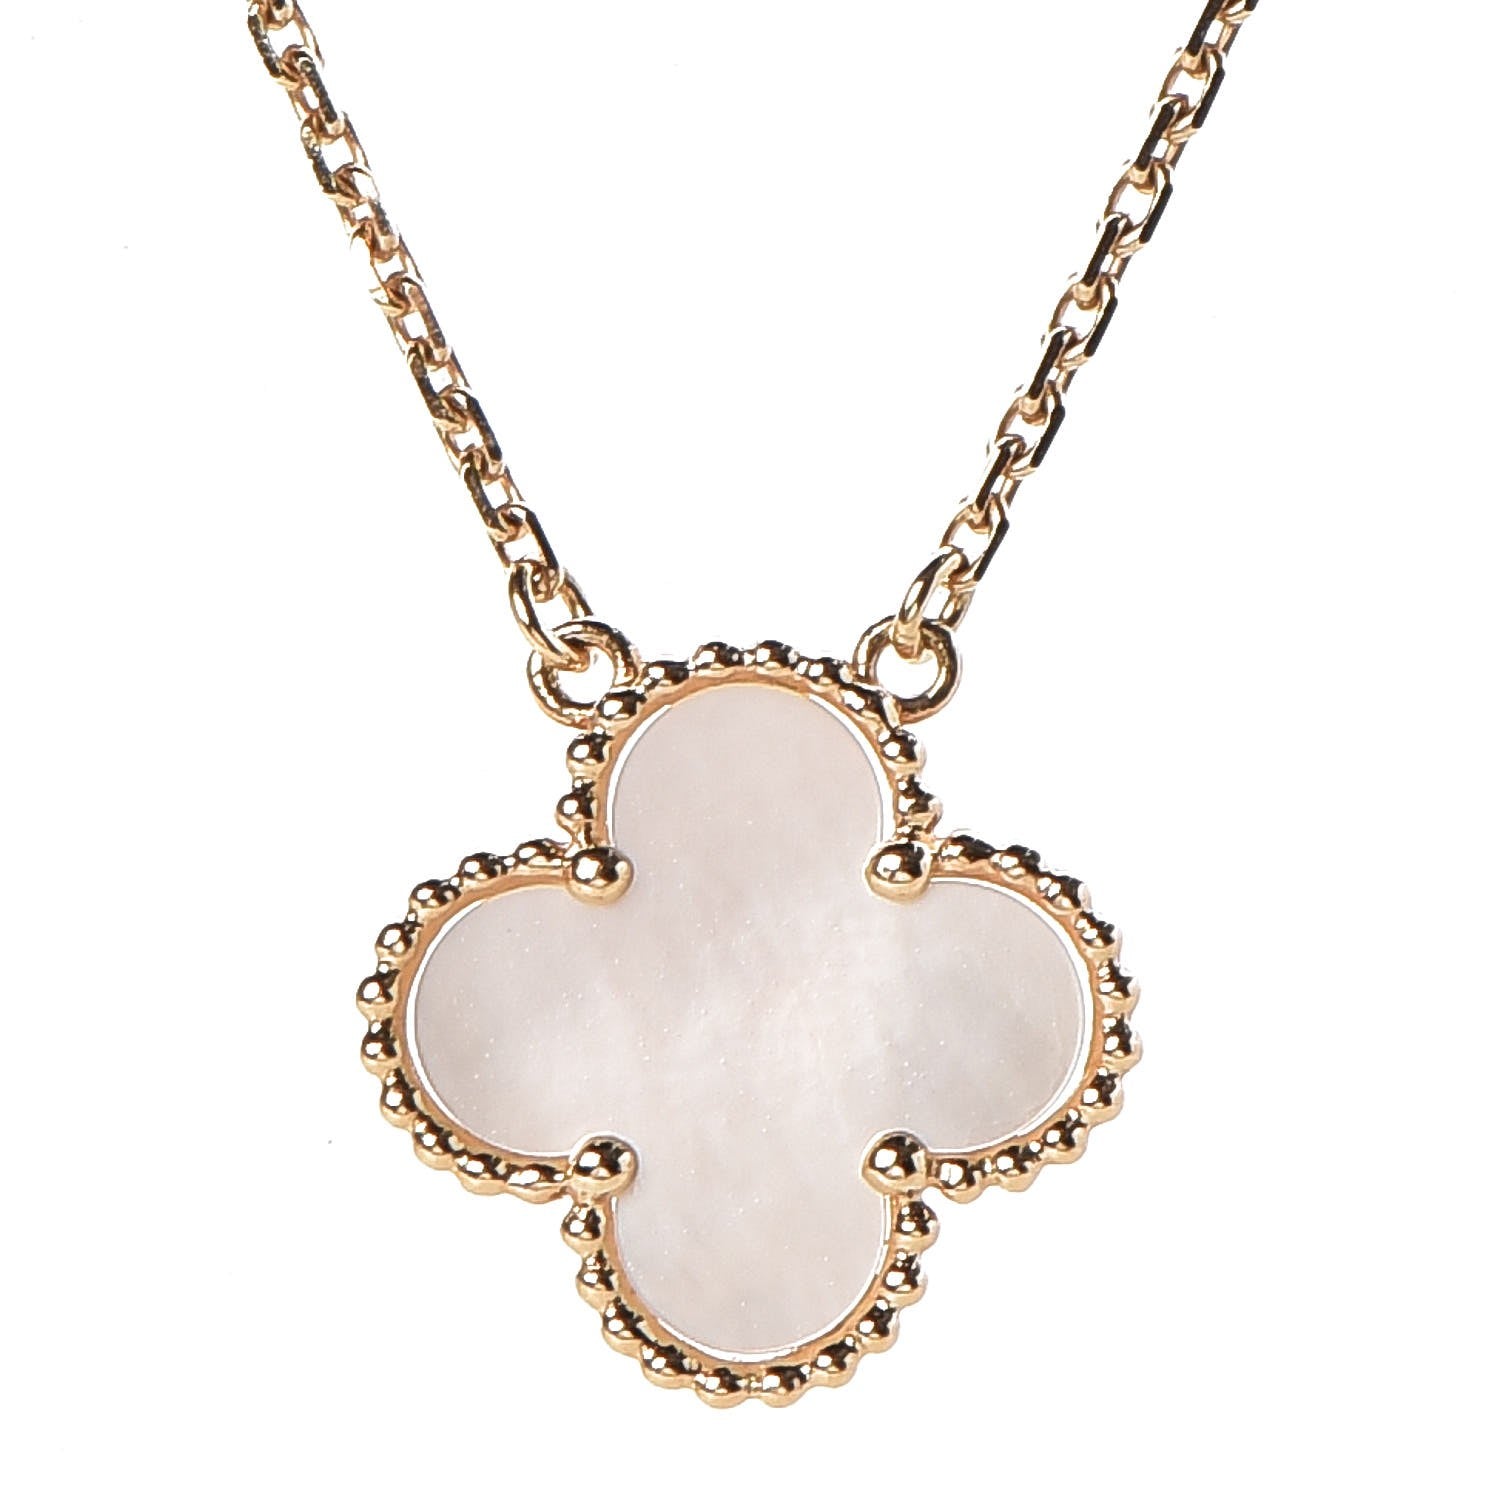 Van Cleef & Arpels Sweet Alhambra Necklace Clover Charm